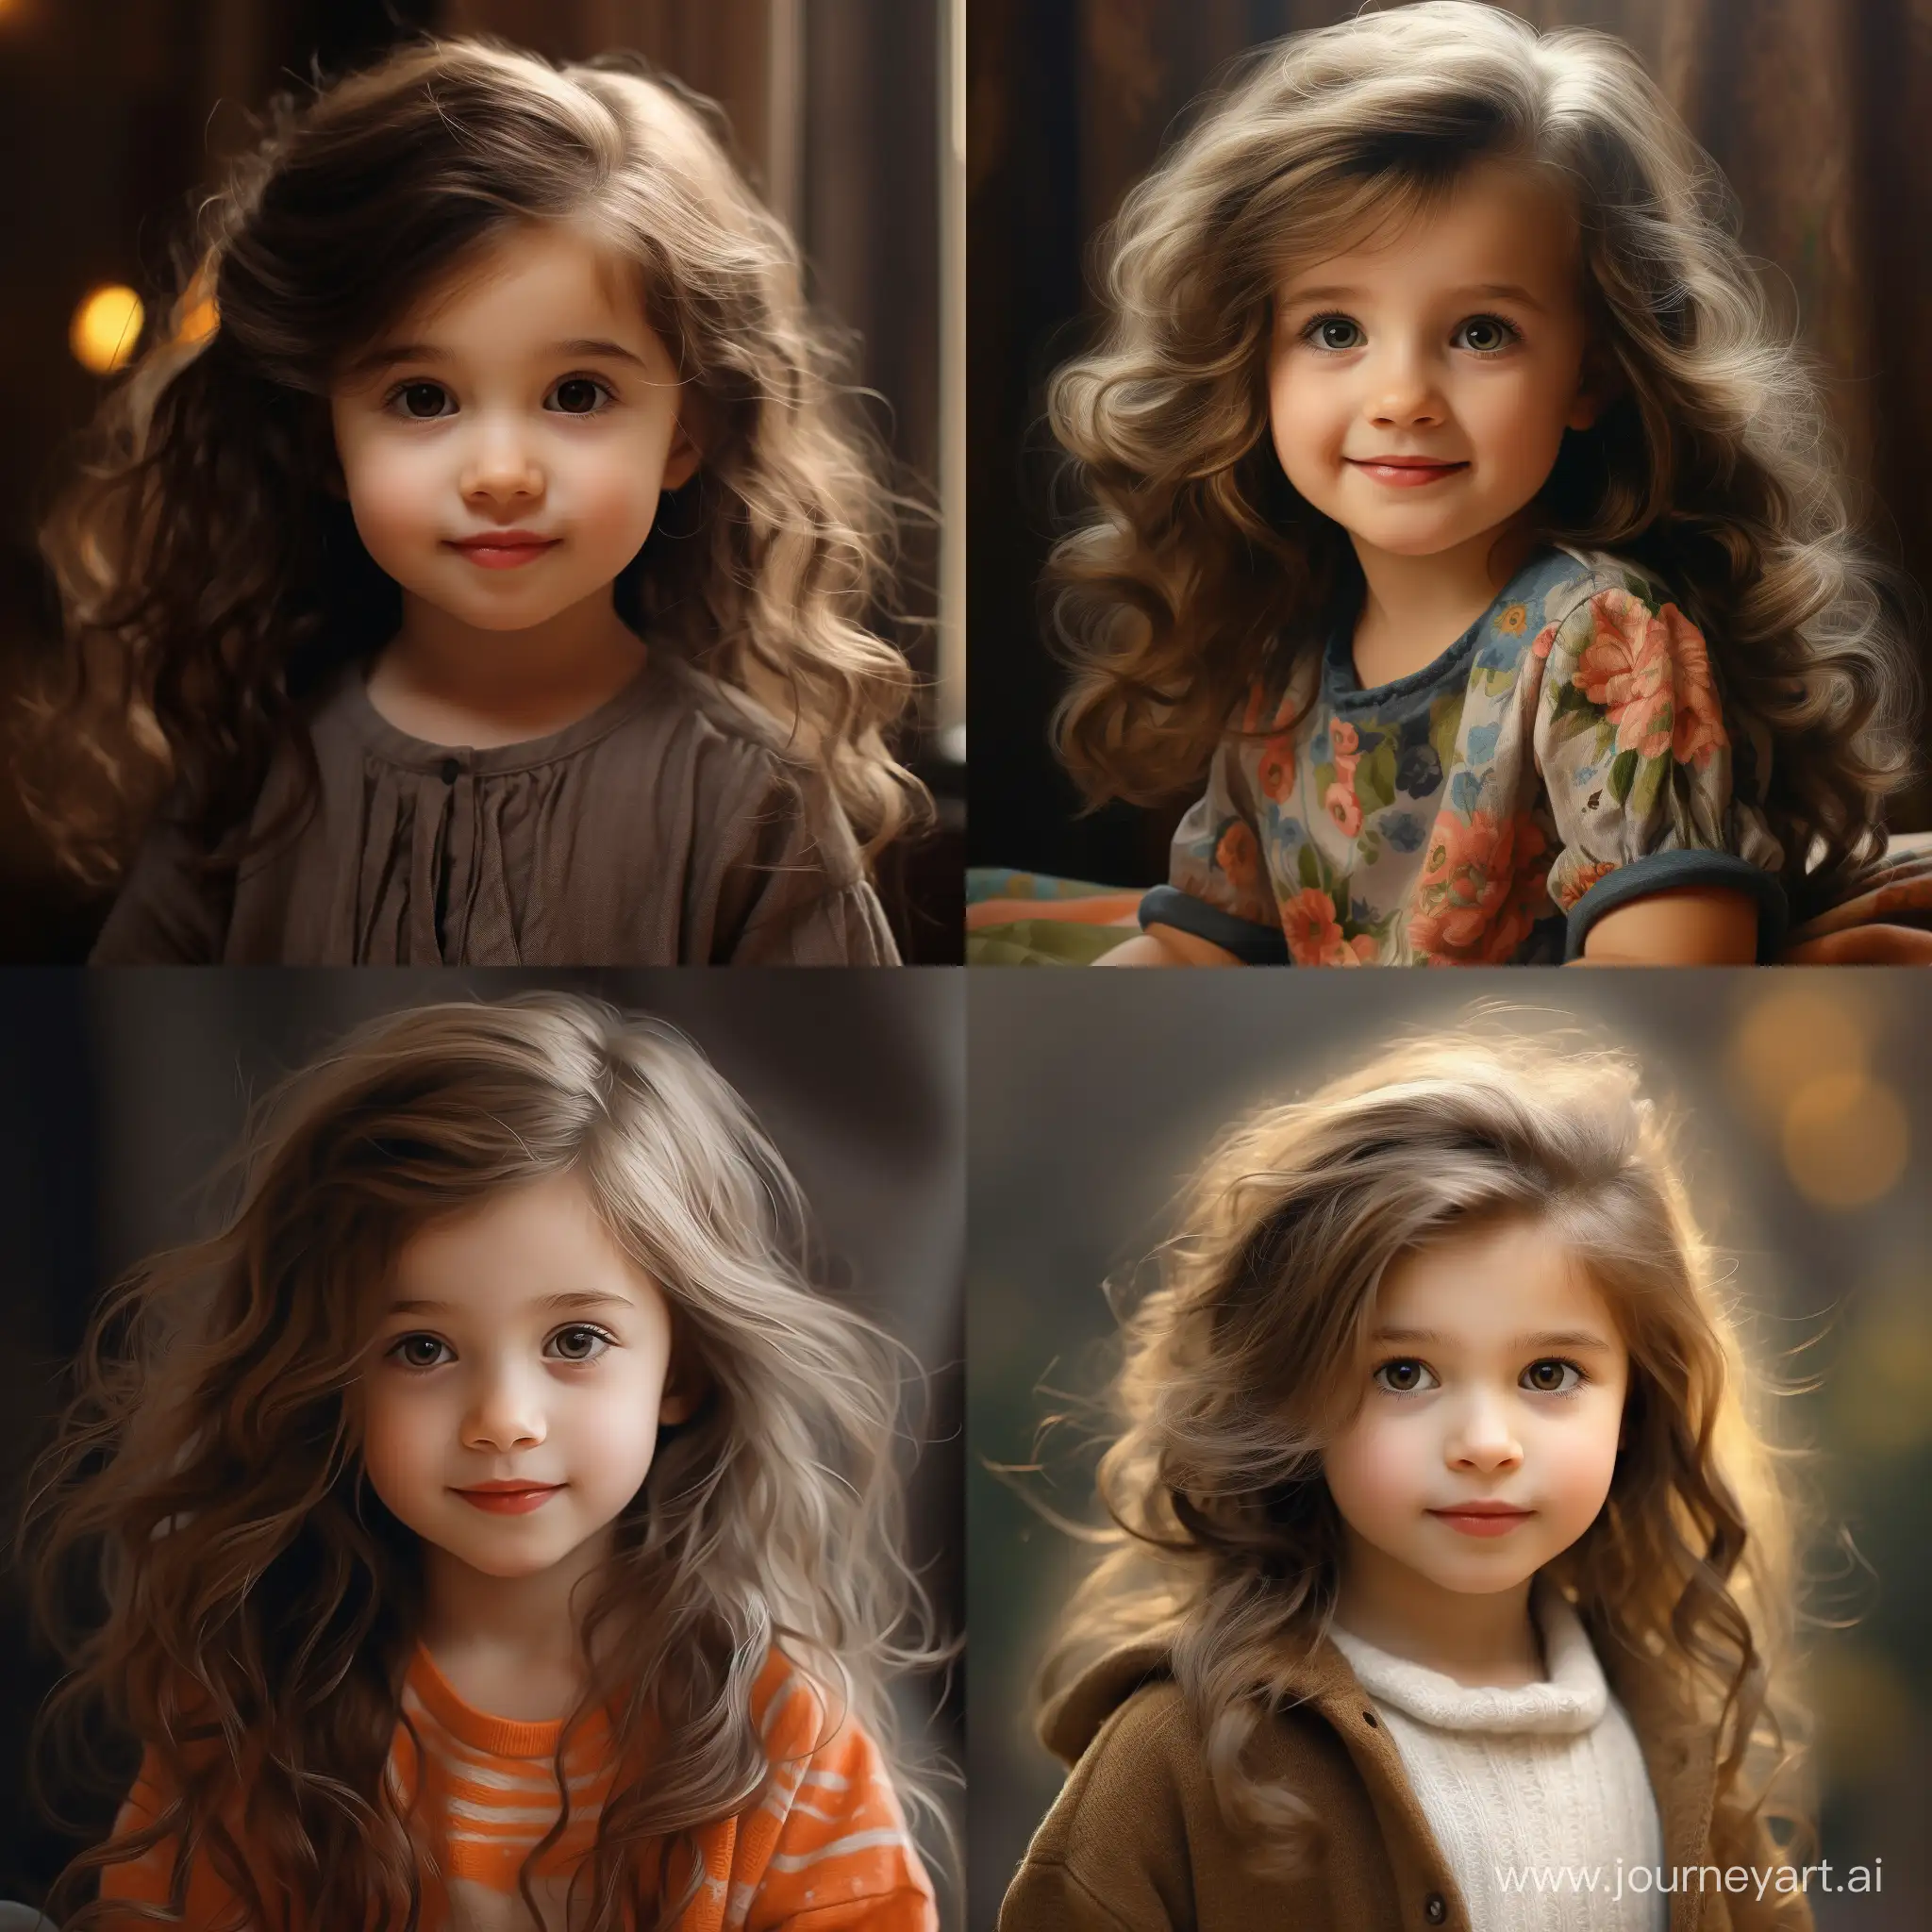 Charming-Portrait-of-an-Adorable-Little-Girl-Artistic-Aspect-Ratio-11